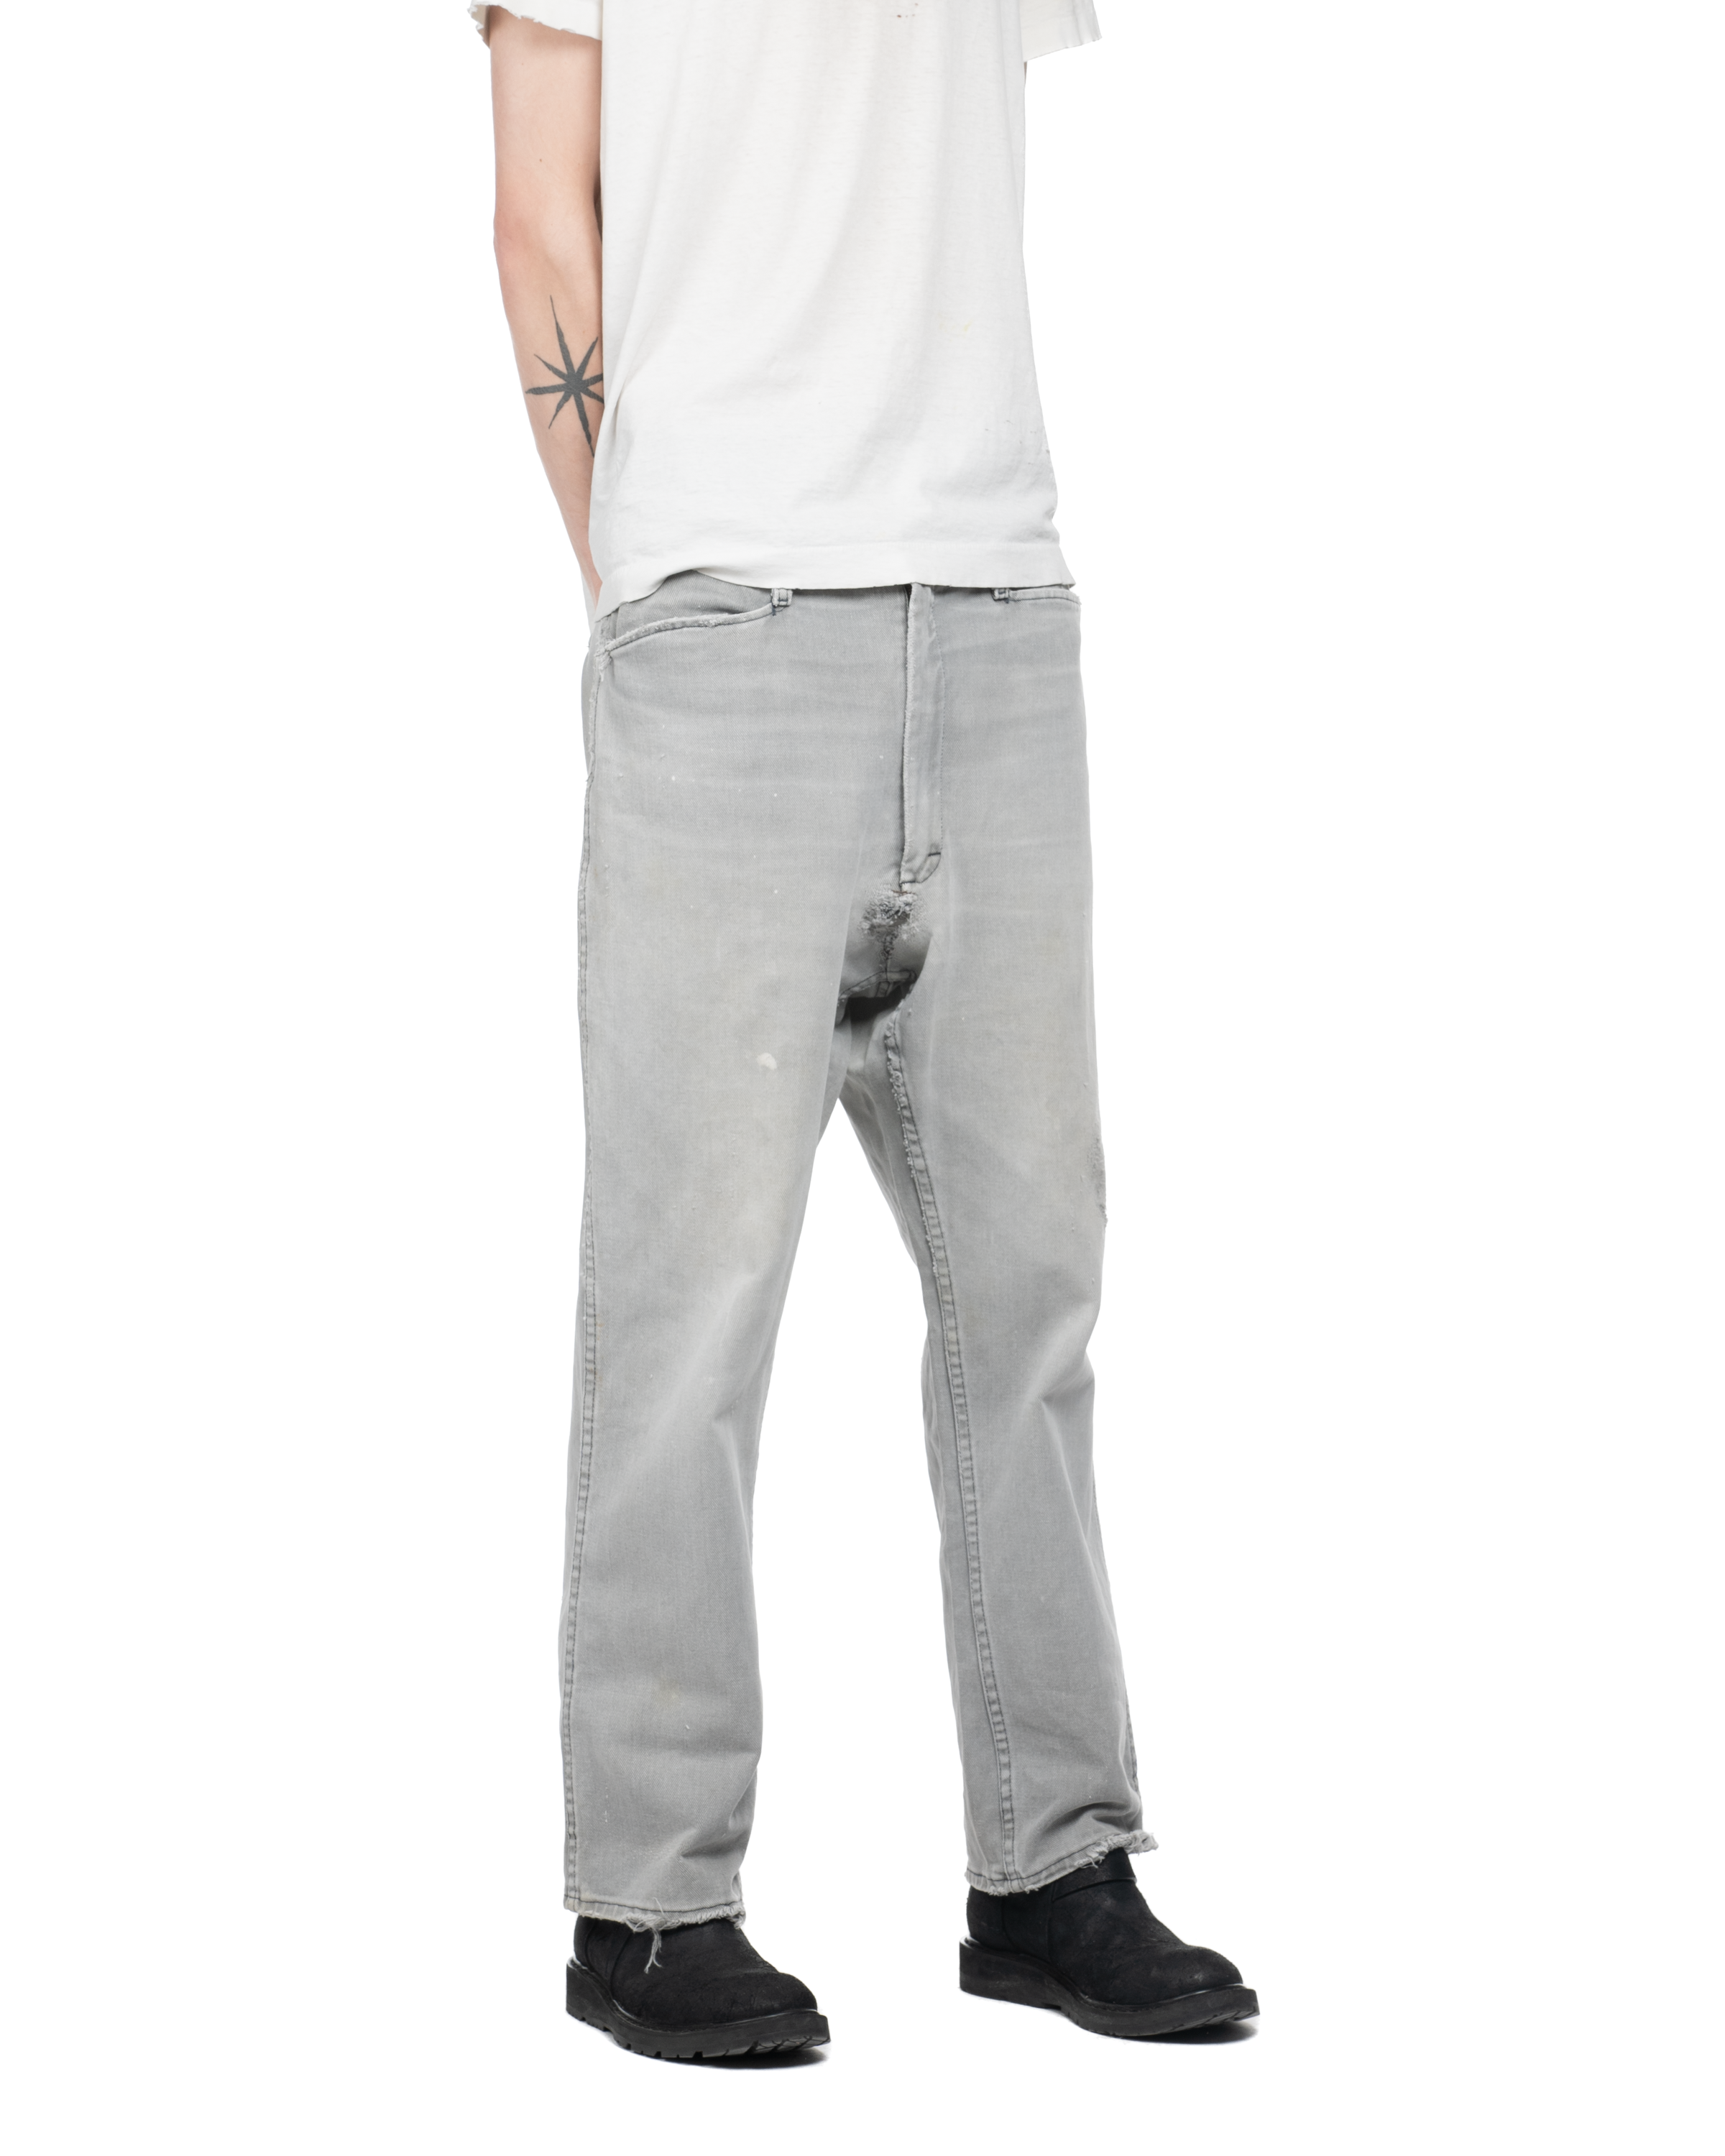 60's Lee Frisko Jeens Can't Bust 'Em Trousers - 32 x 28.5